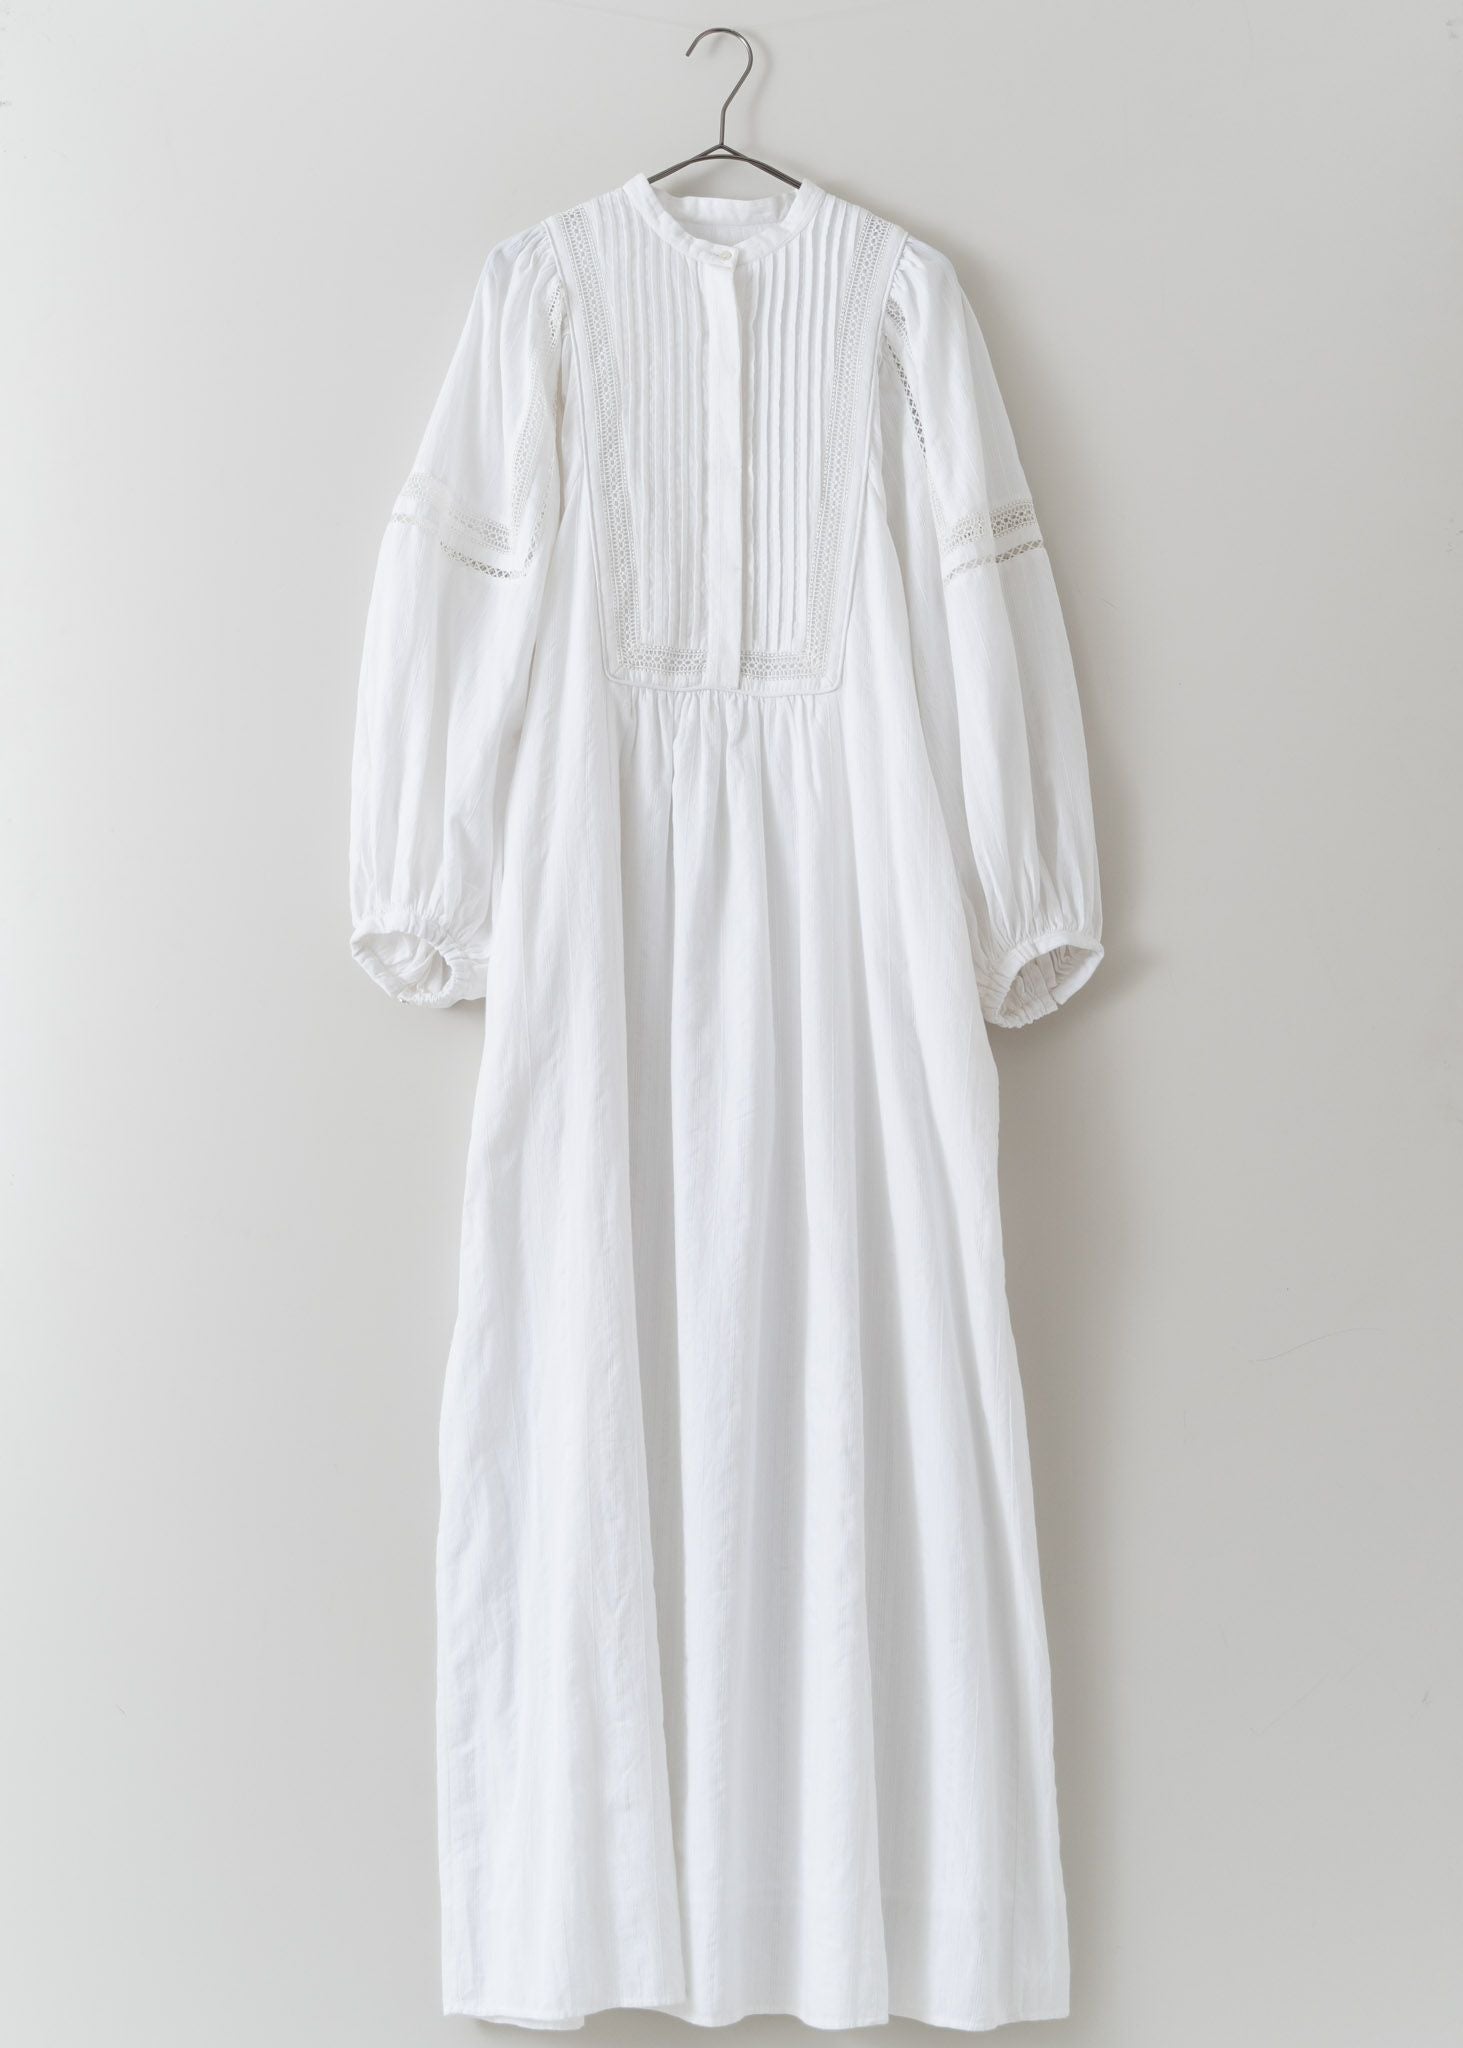 Cotton Dobby Stripe Square Lace Dress - ワンピース